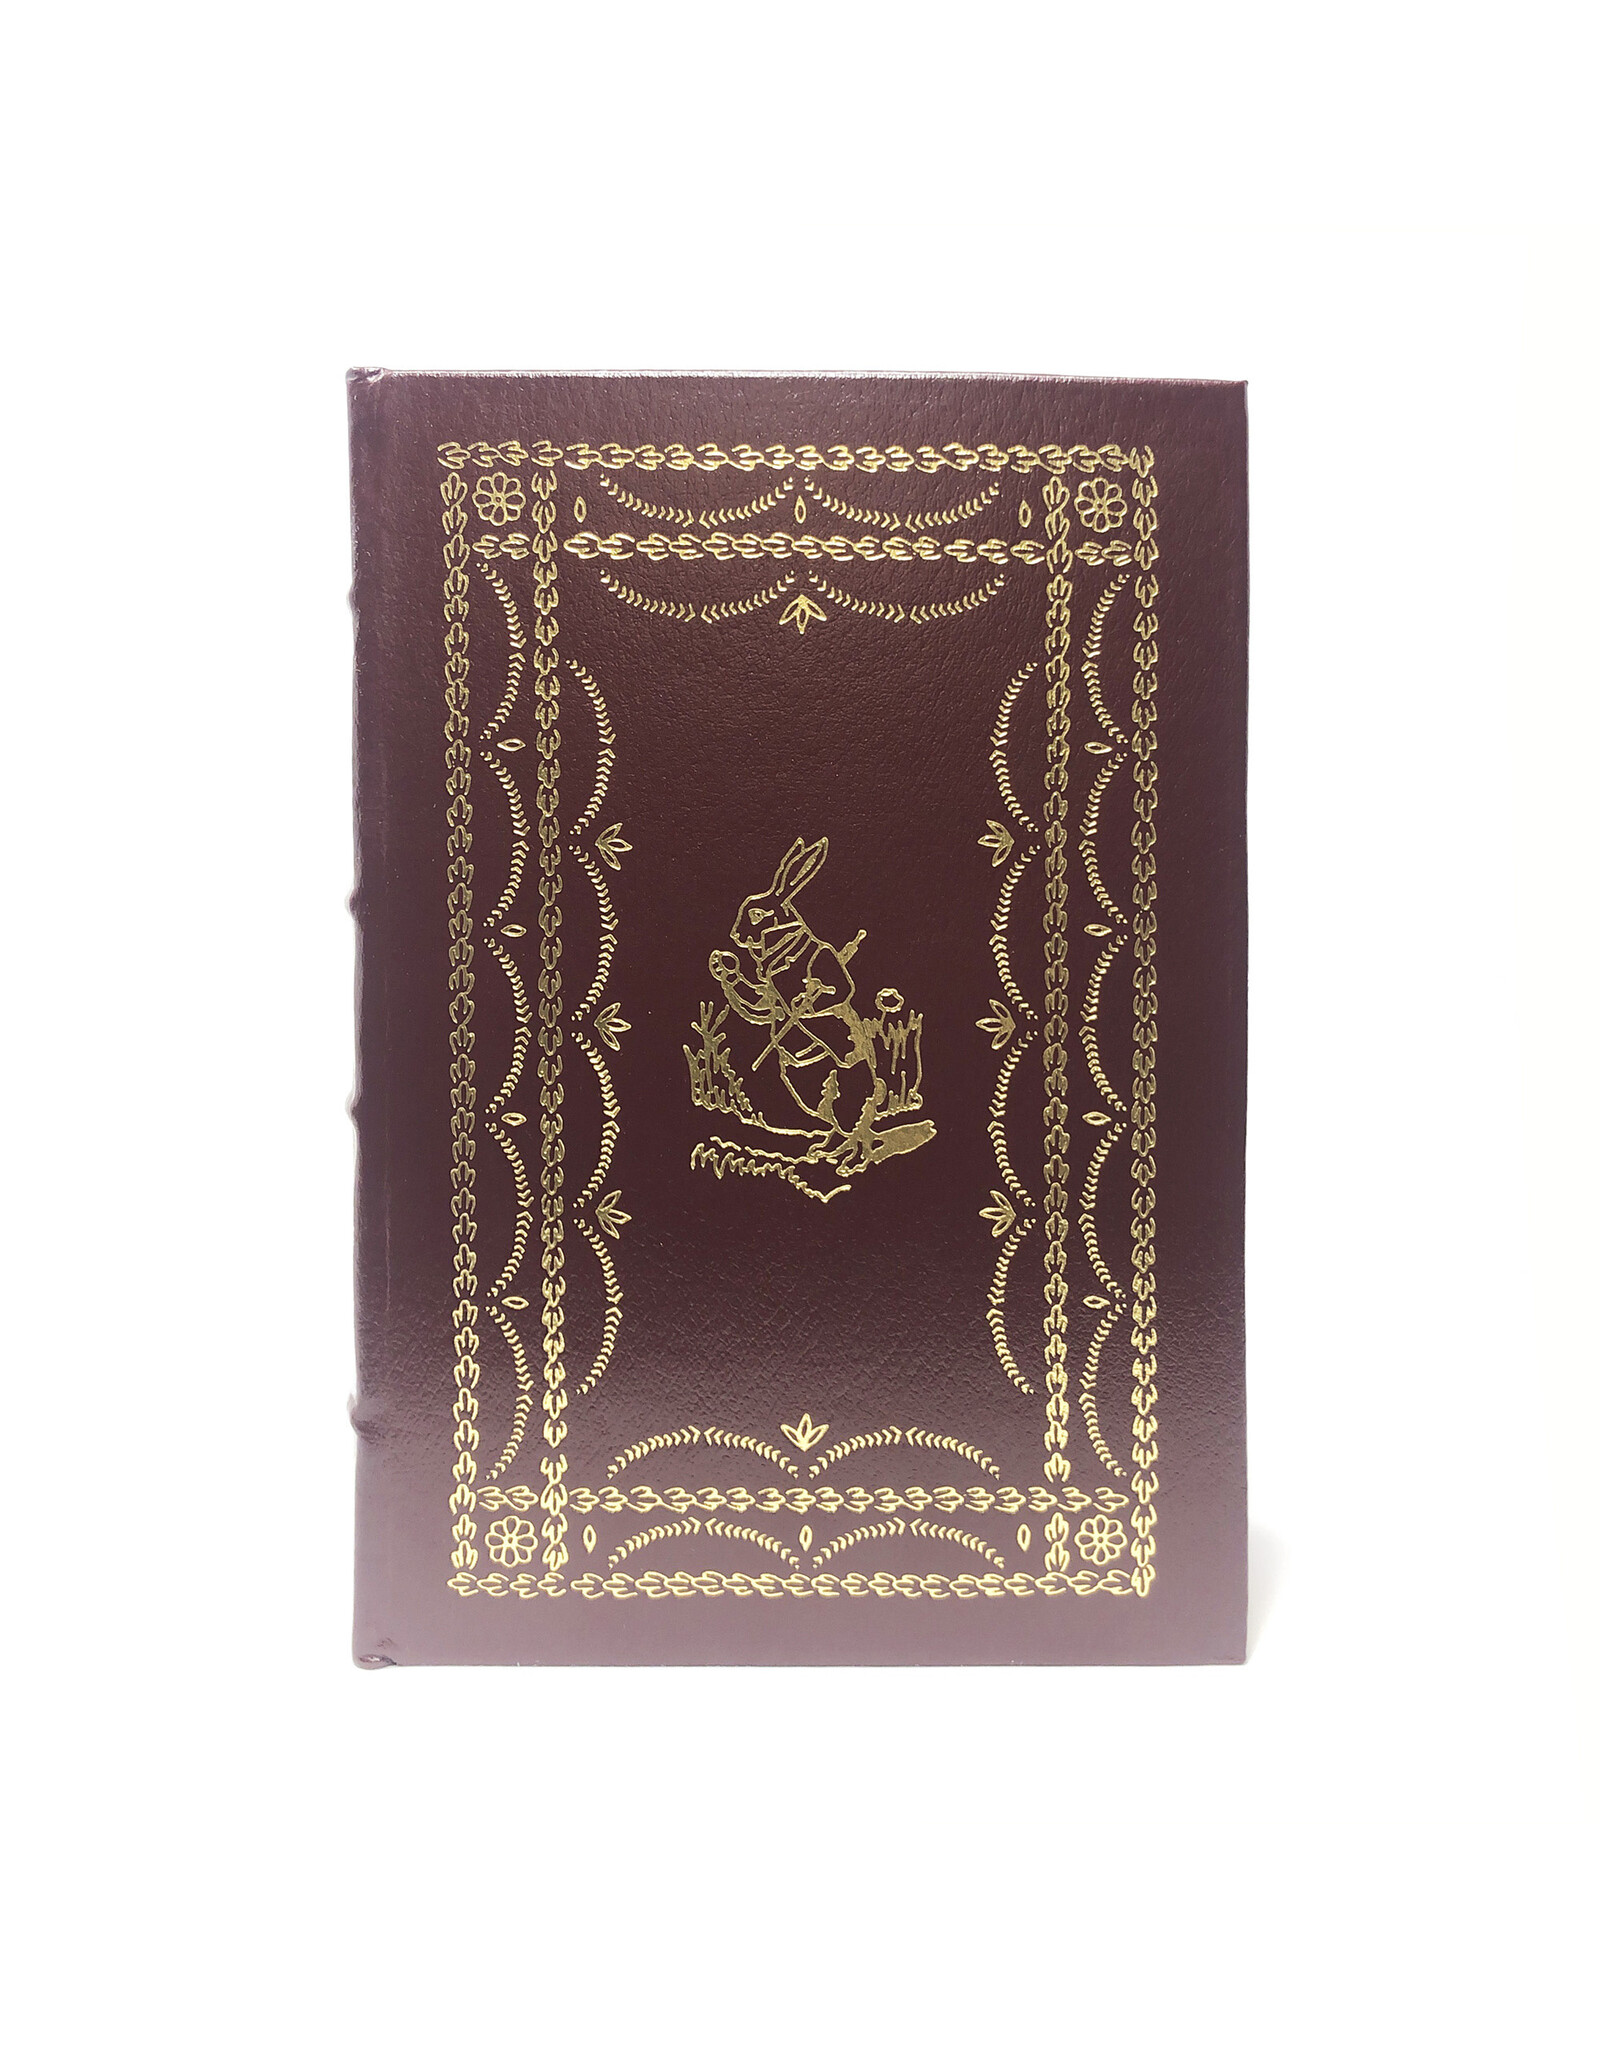 Easton Press Alice's Adventures in Wonderland Easton Press 100 Greatest Books Ever Written Deluxe Leather Edition